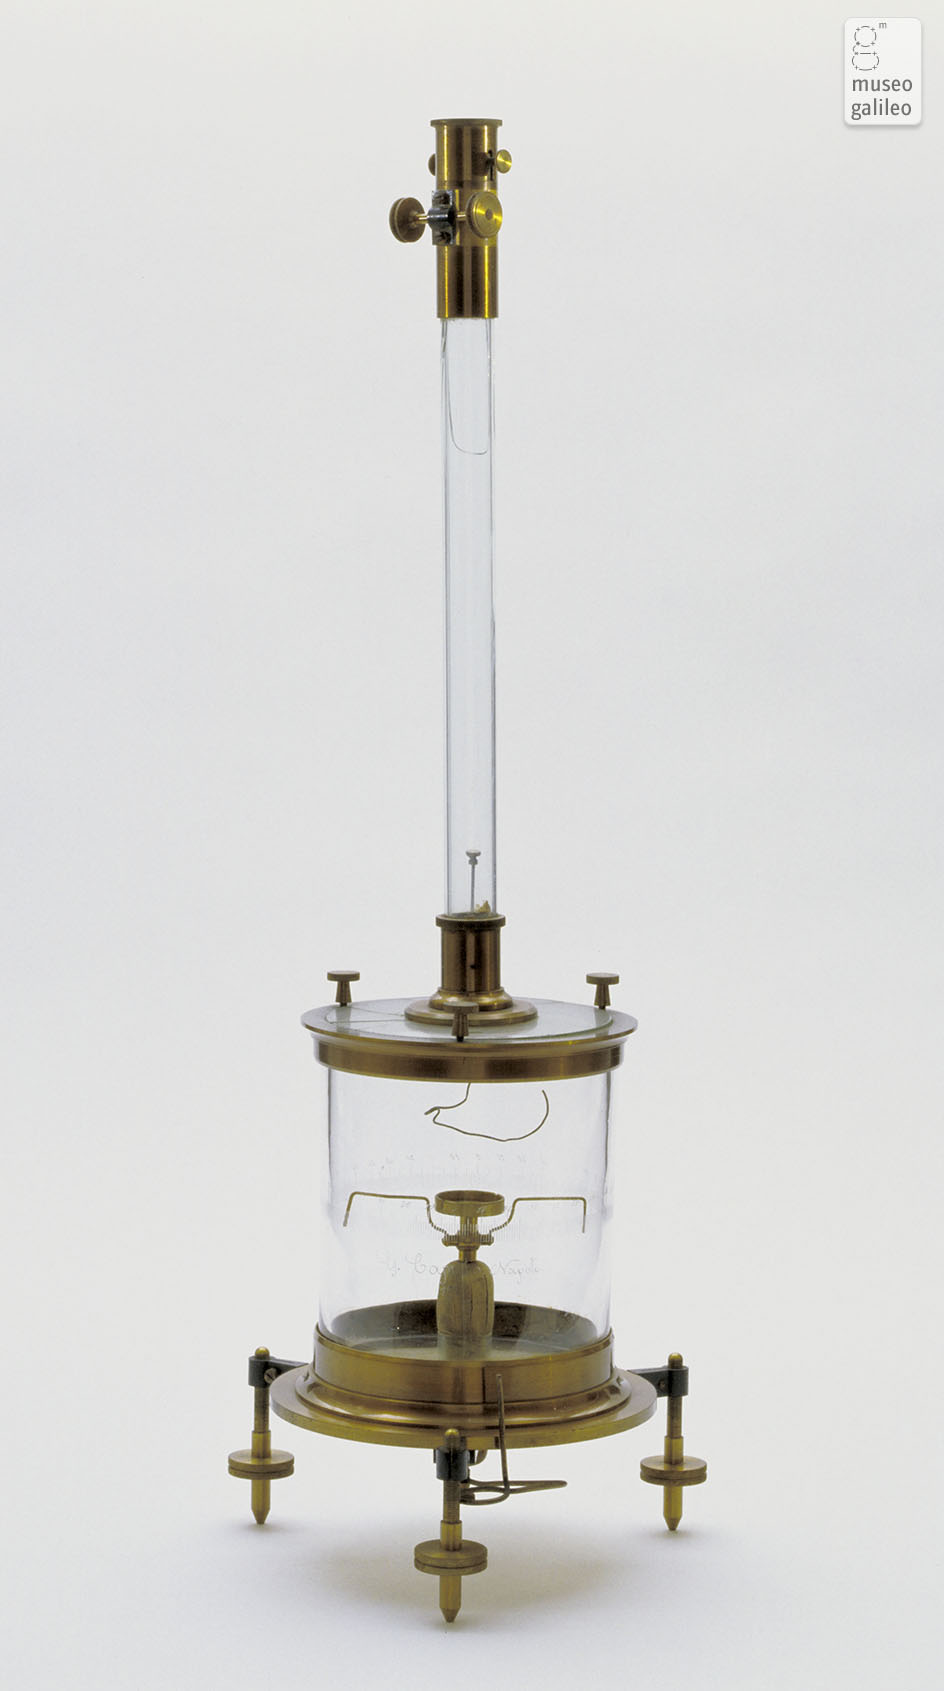 Bifilar suspension electrometer, Palmieri pattern (Inv. 1411)